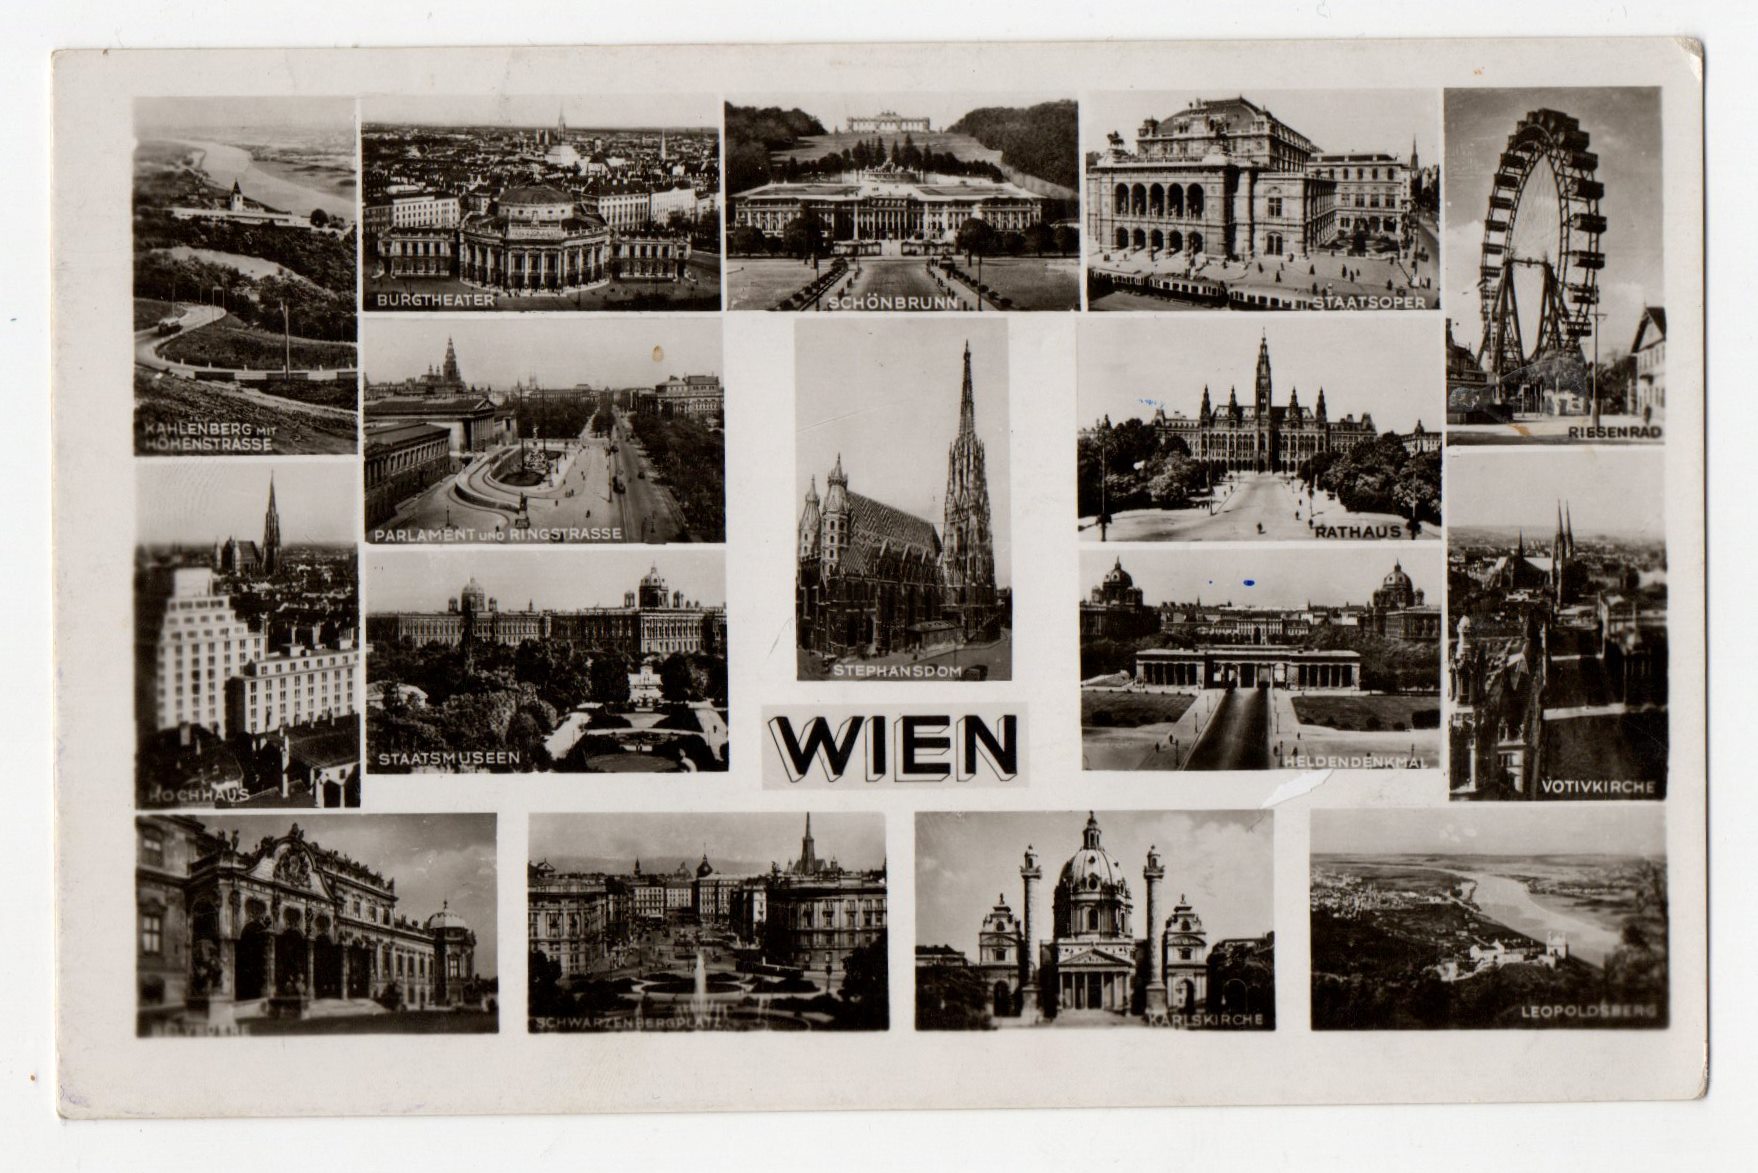 Поштова листівка. "Wien"